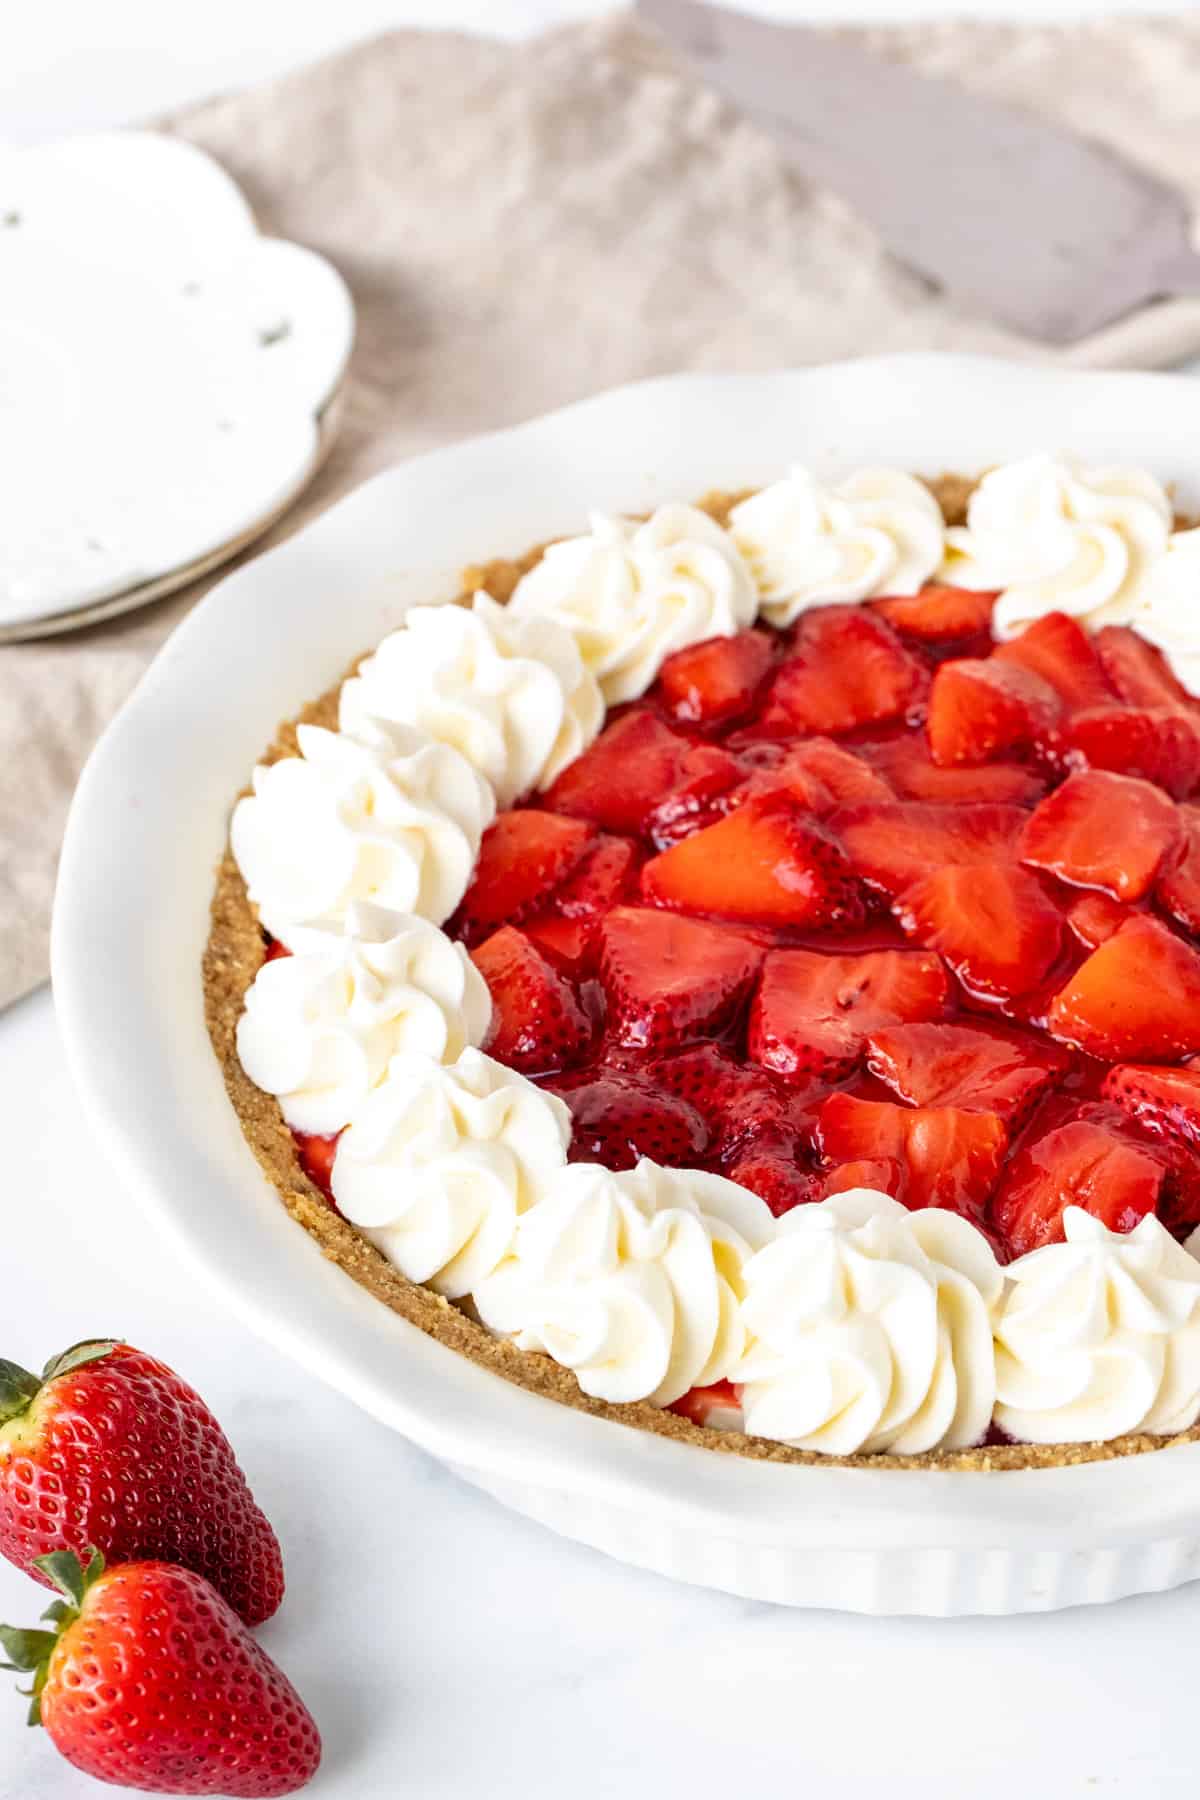 Strawberry cream cheese pie, with whipped cream around the edges